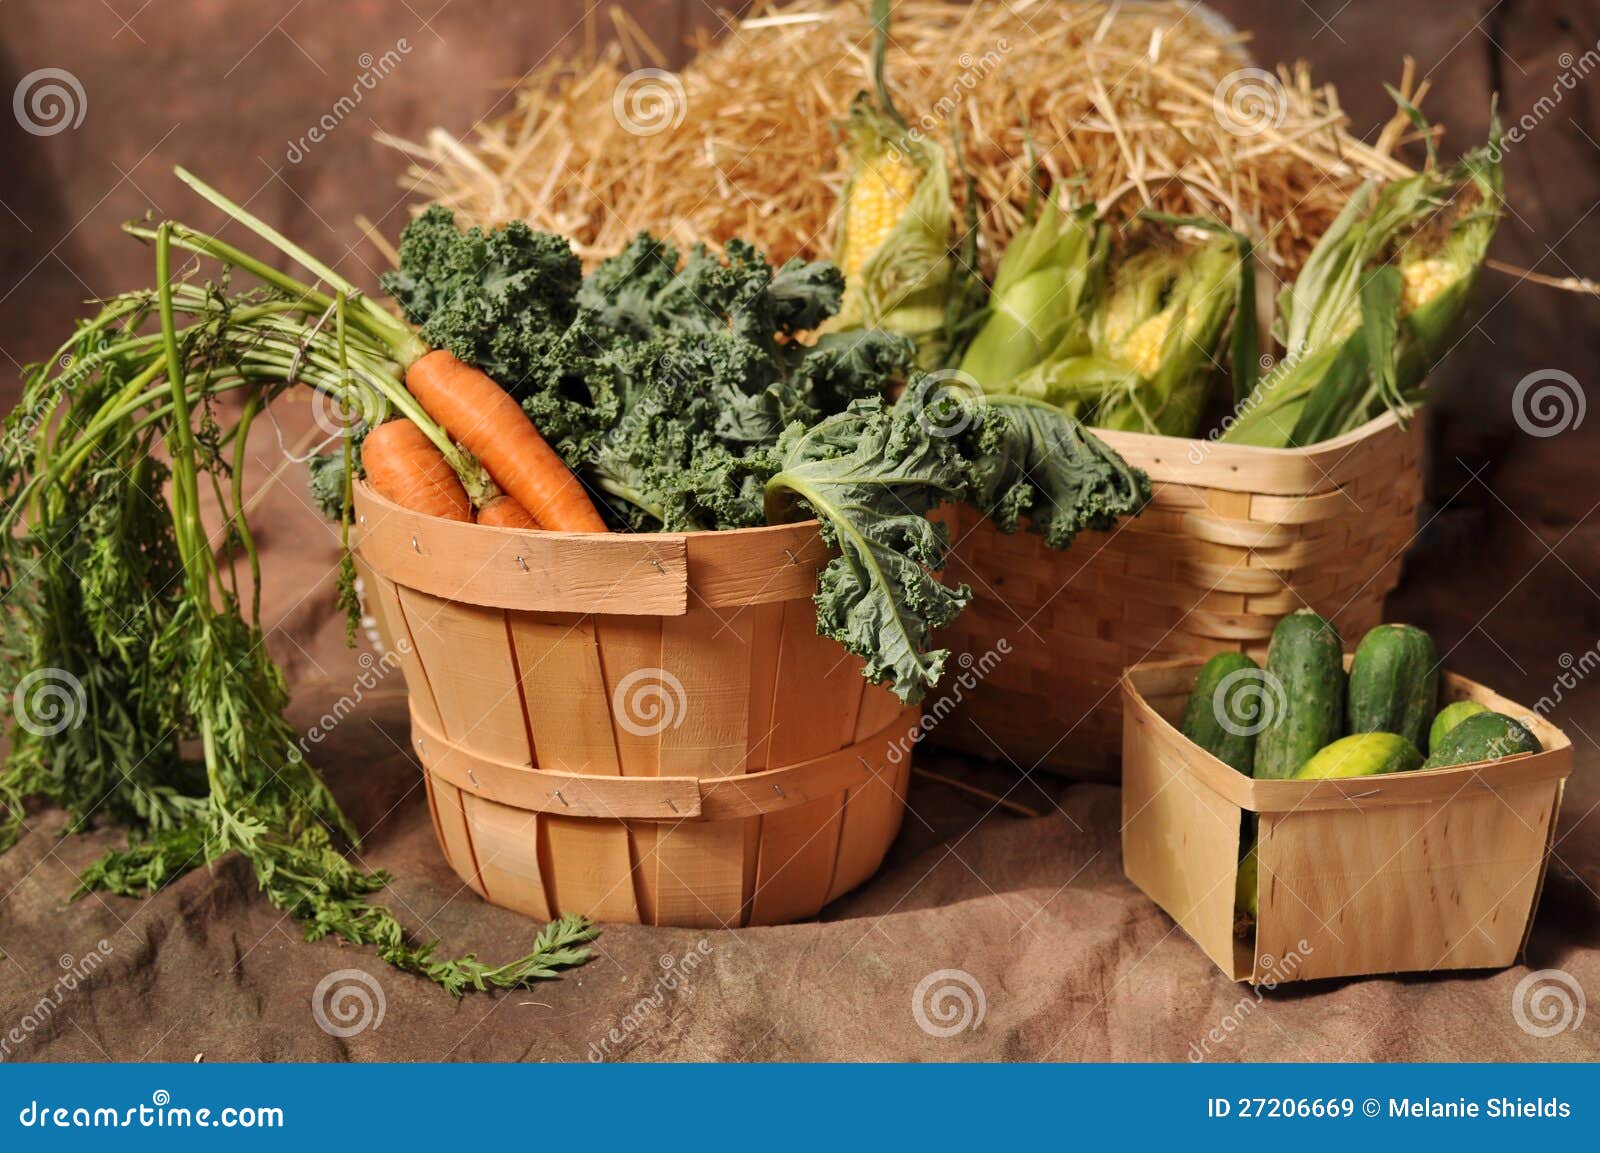  - fall-vegetables-baskets-27206669